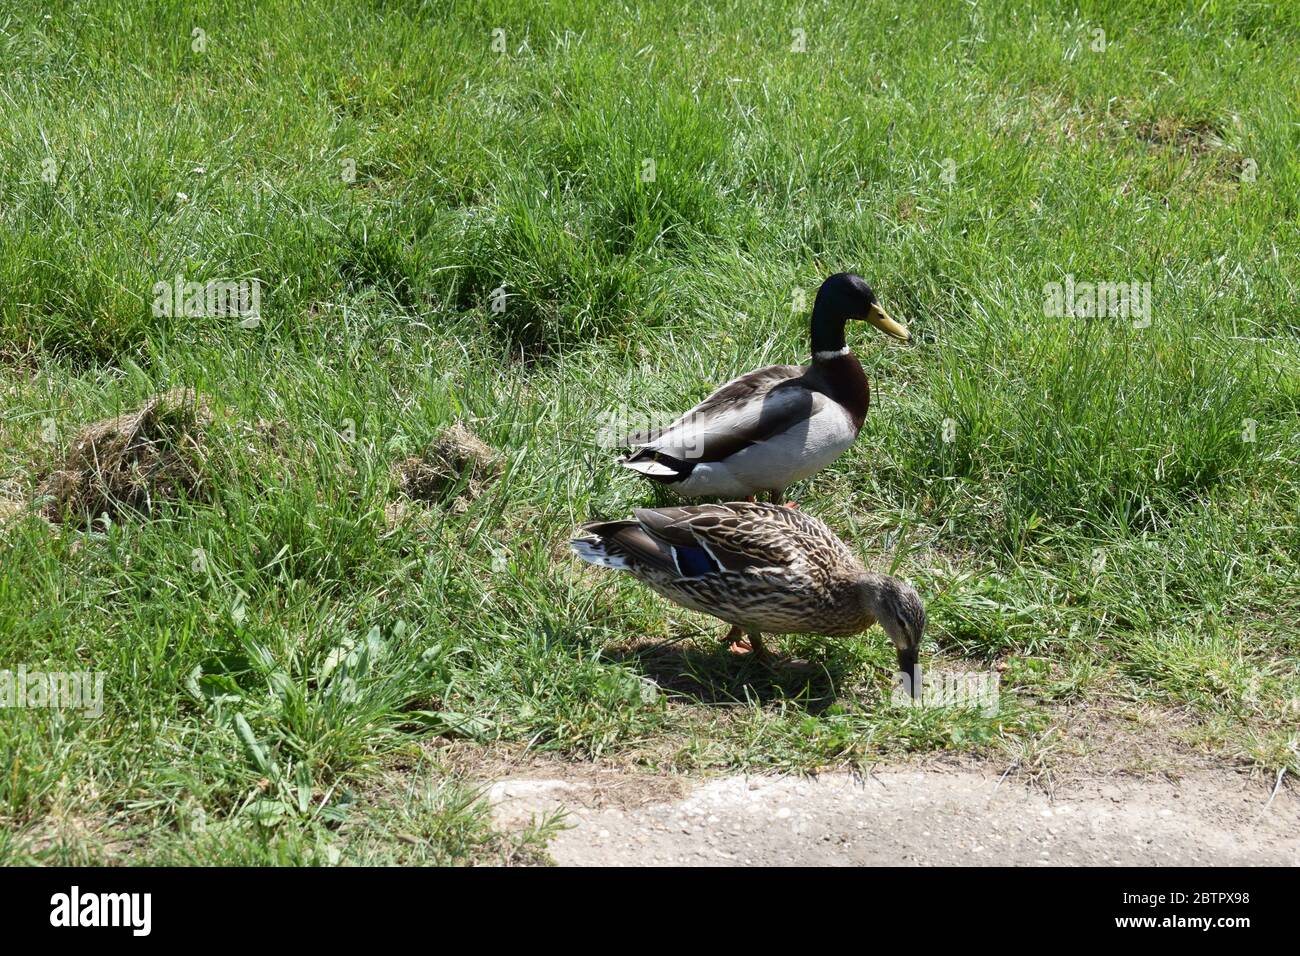 ducks in the grass Stock Photo